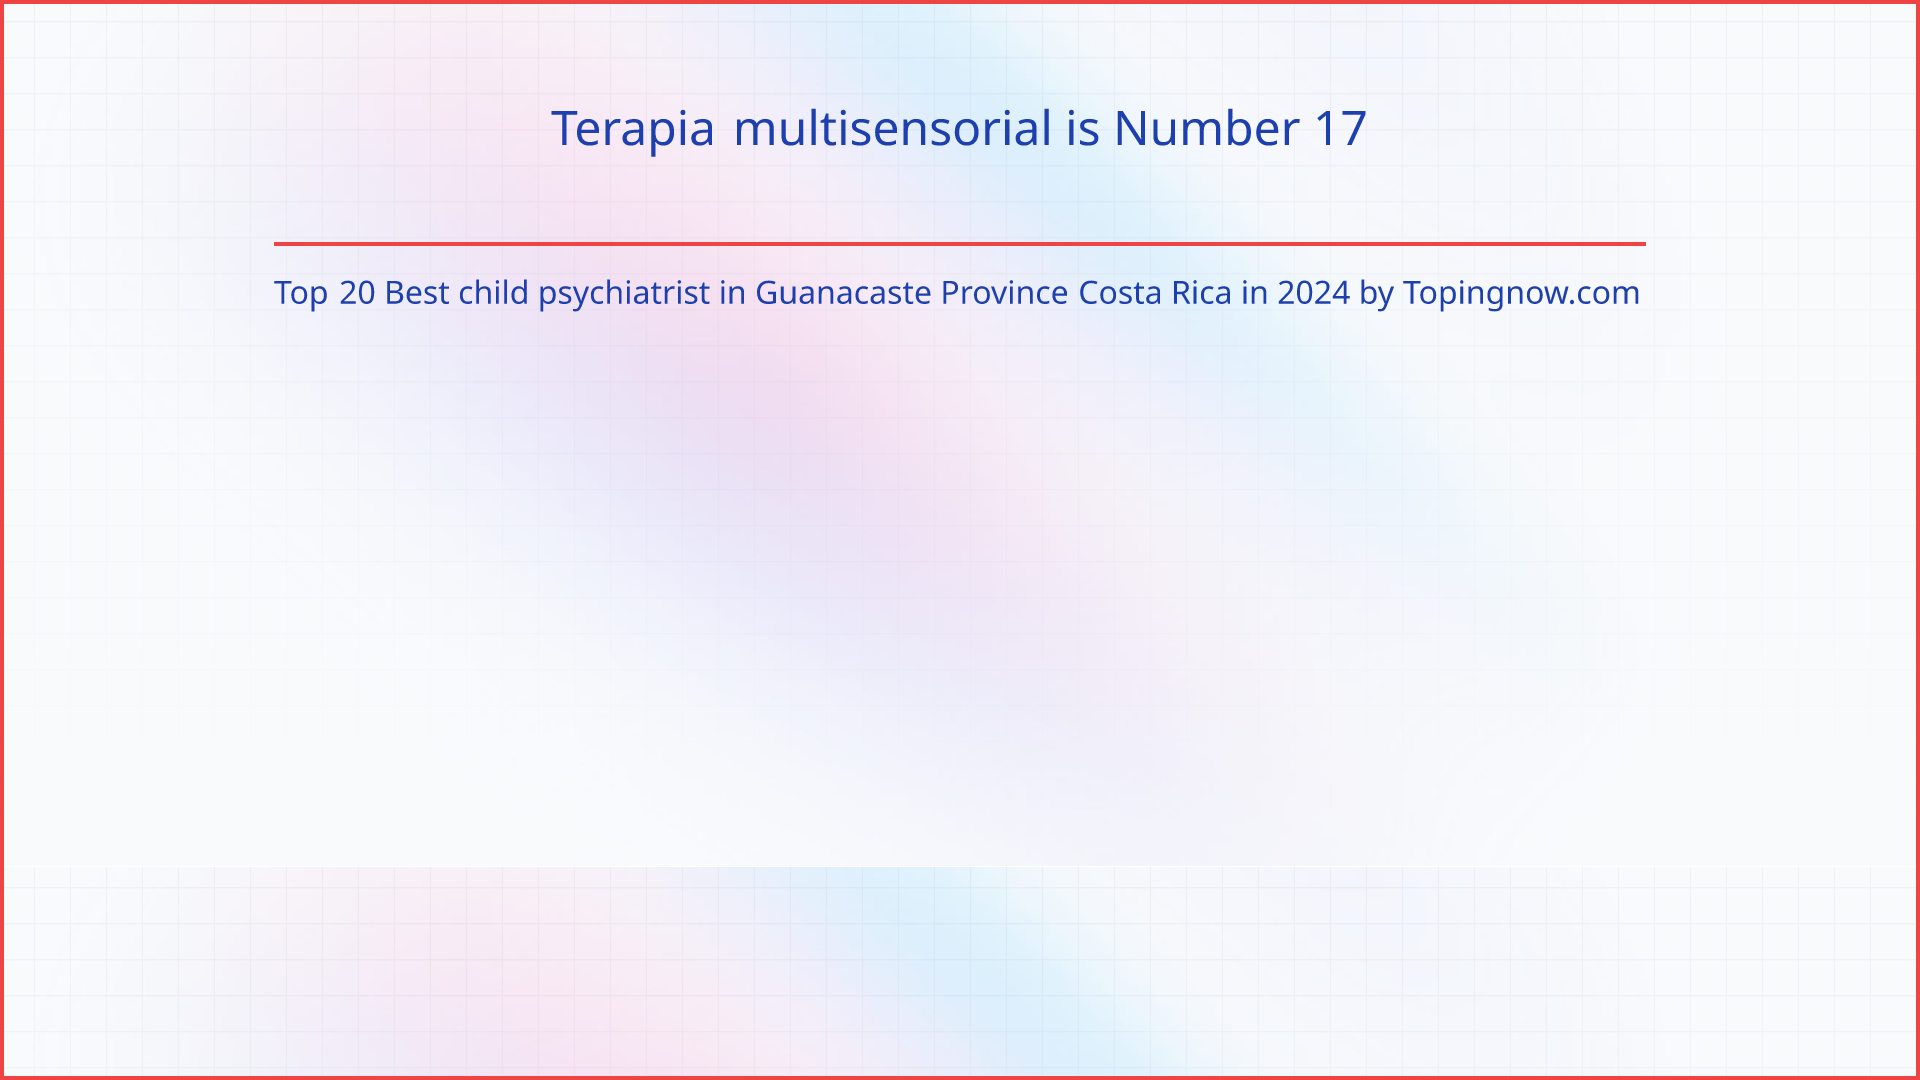 Terapia multisensorial: Top 20 Best child psychiatrist in Guanacaste Province Costa Rica in 2024